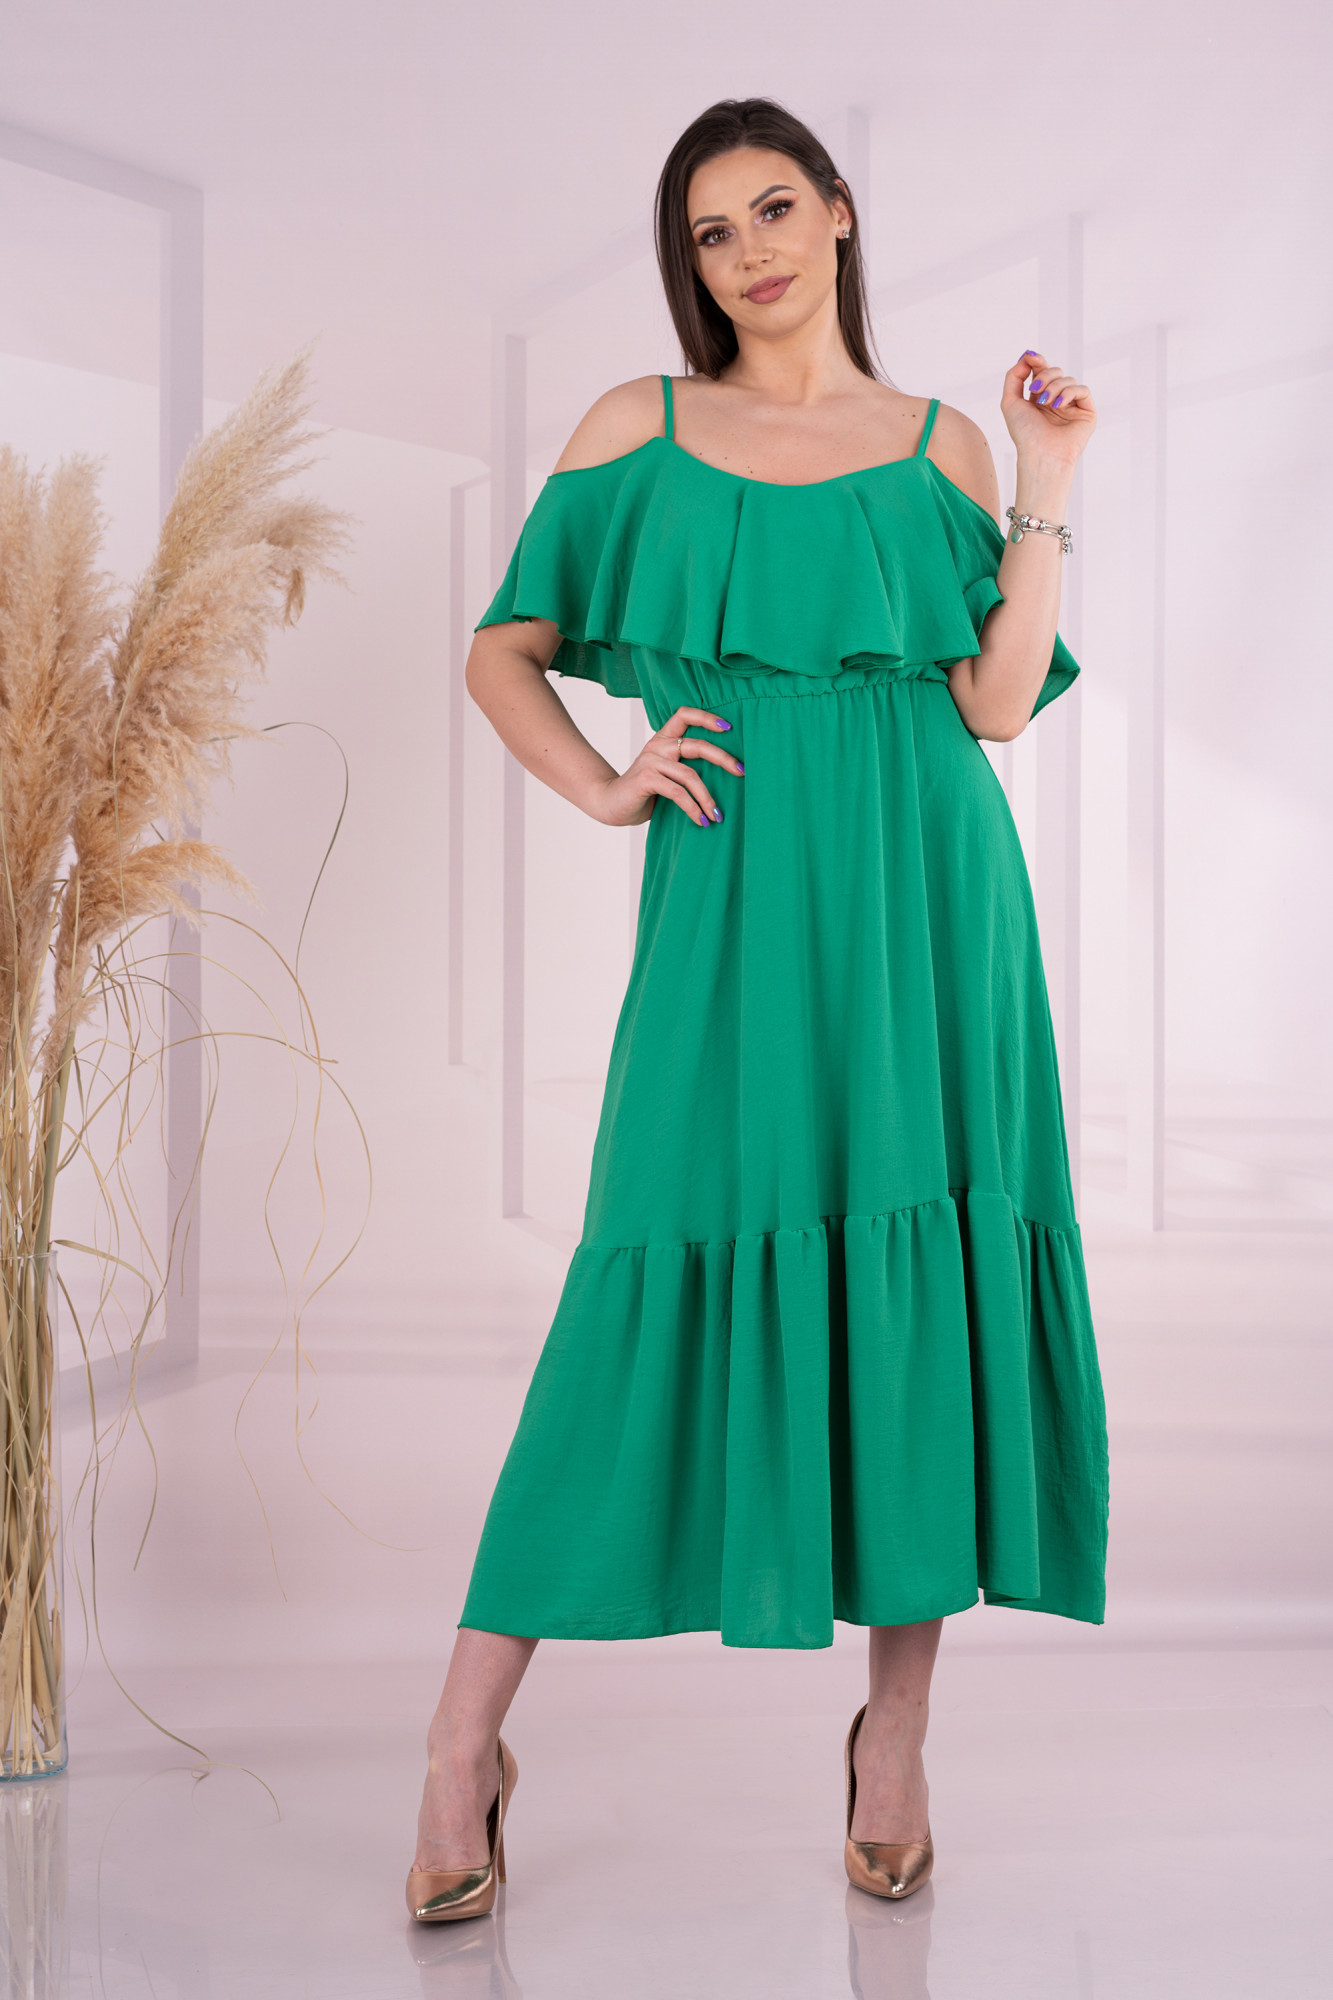 Sunlov Zelené šaty - Merribel jedna velikost